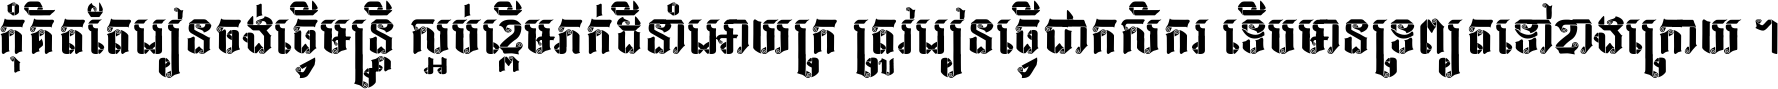 Khmer P Romchek4